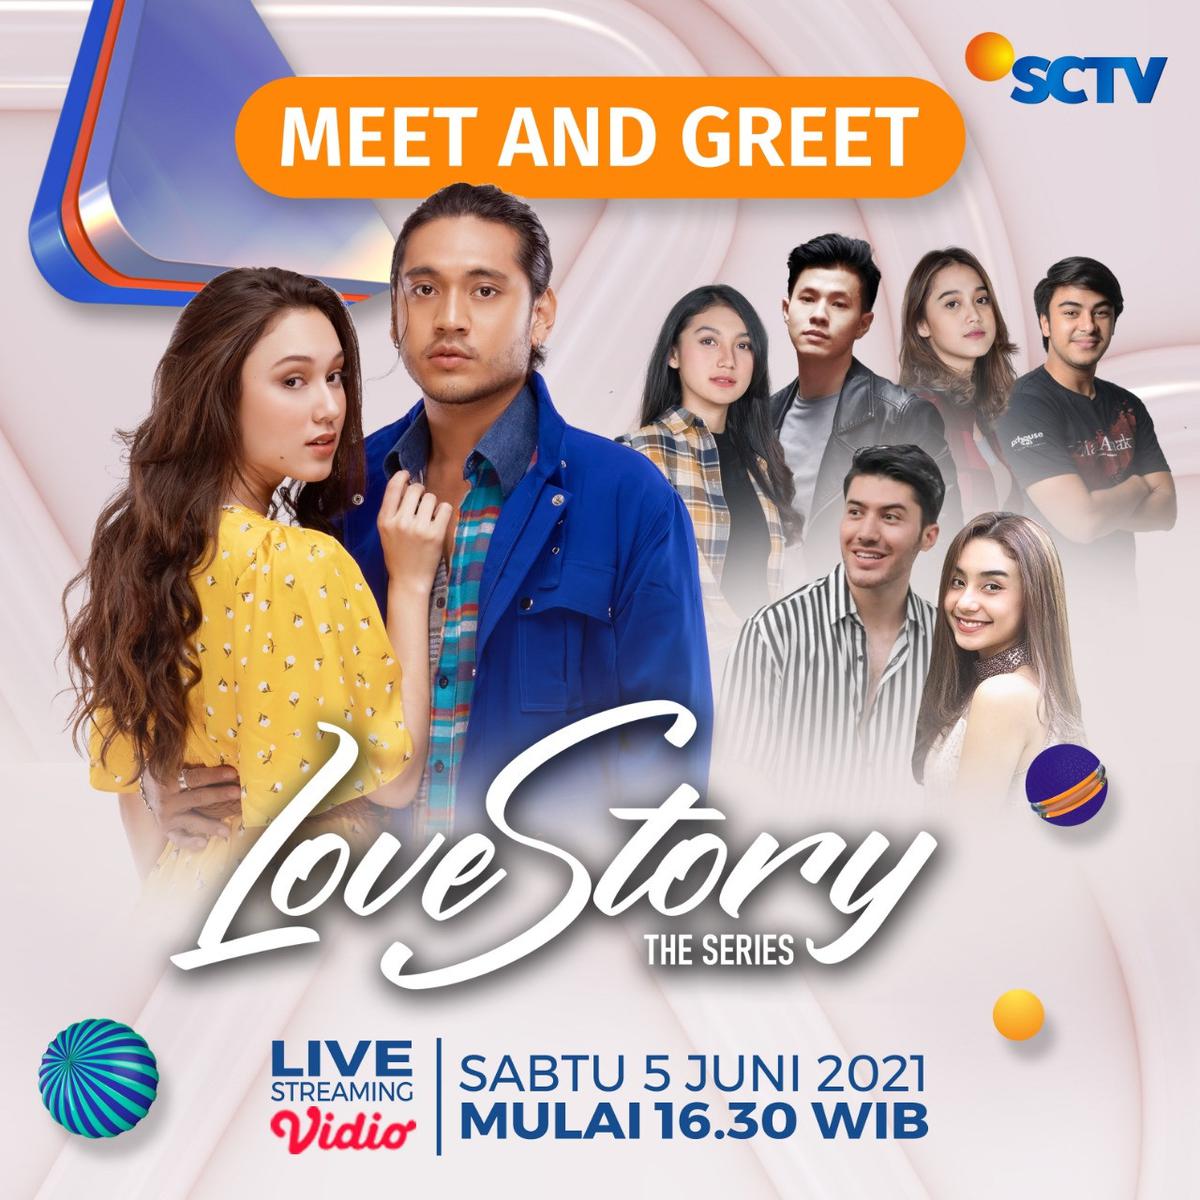 Ini sctv the story vidio love com series hari STREAMING SCTV